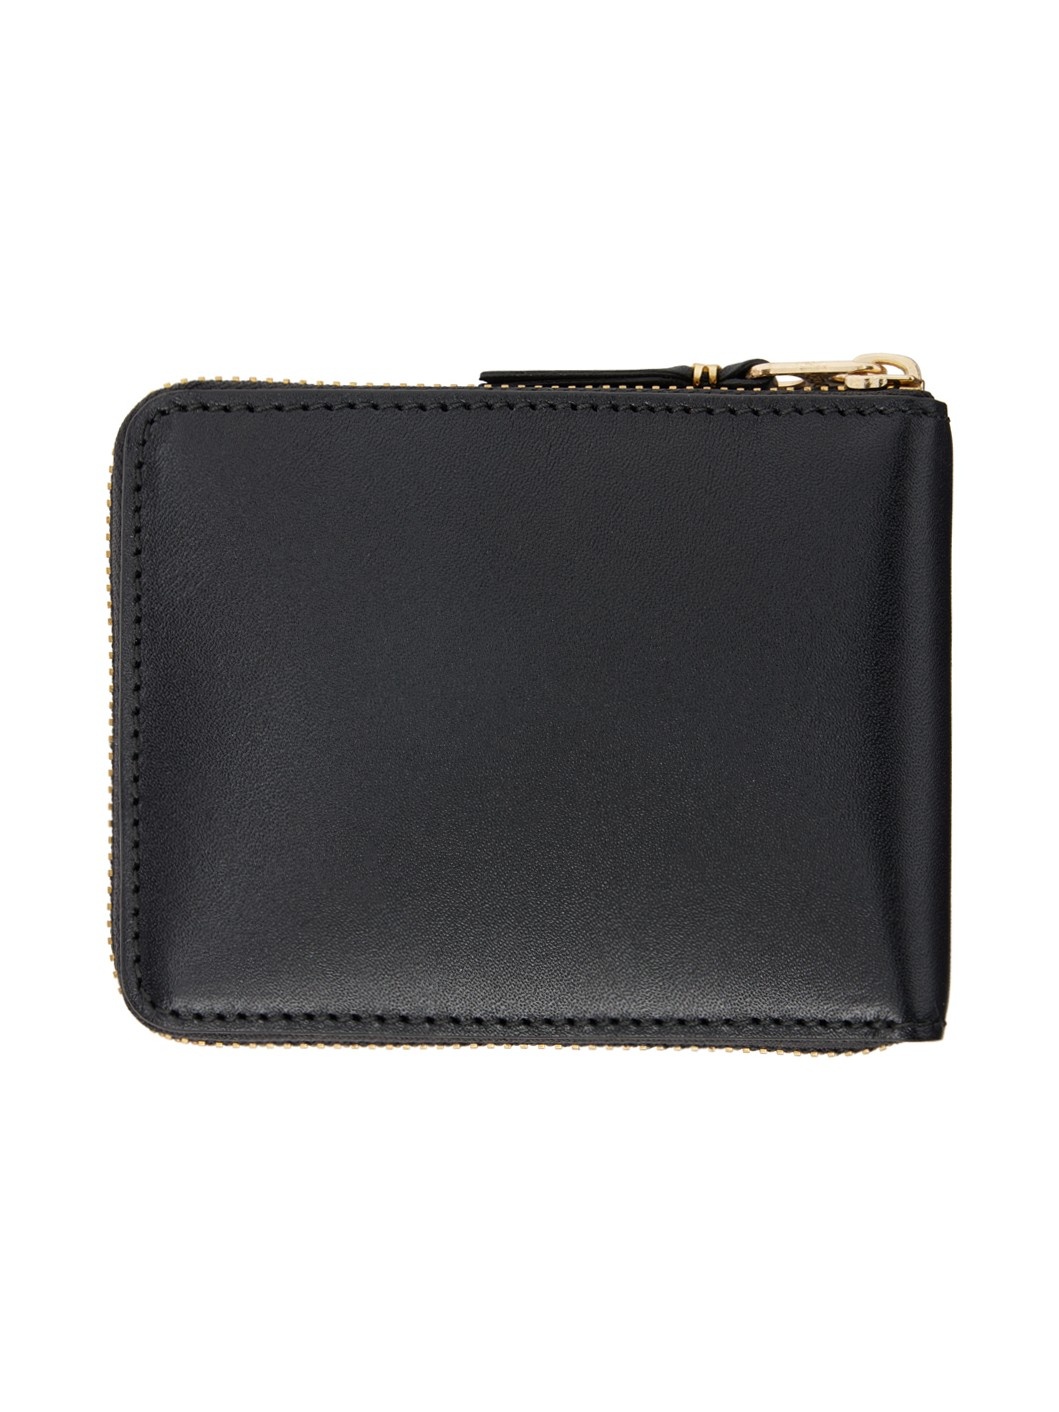 Black Classic Wallet - 2